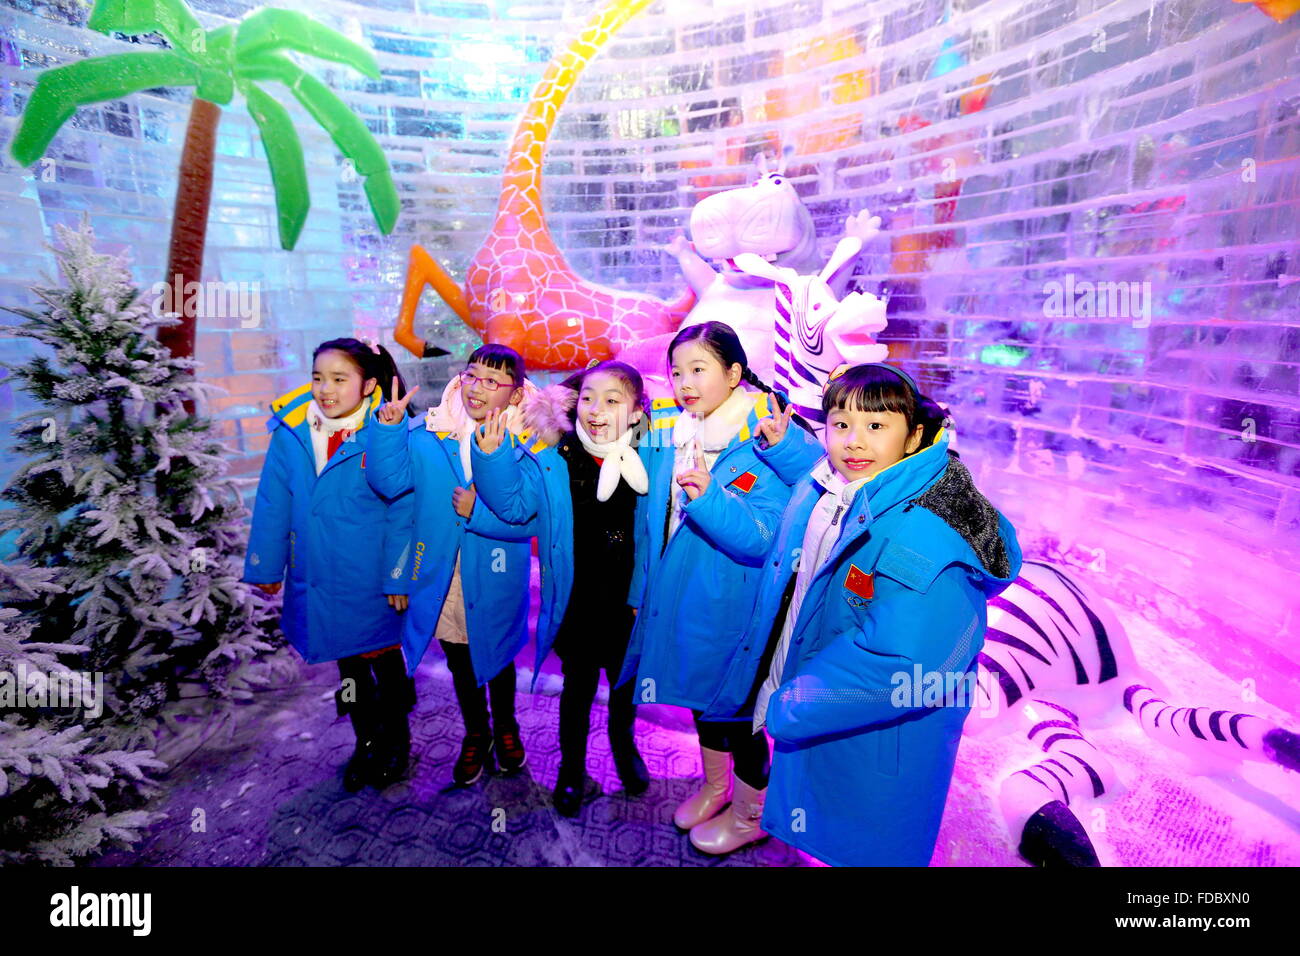 (160130) -- RUIAN (ZHEJIANG), Jan. 30, 2016 (Xinhua) -- Children pose with ice sculptures of cartoon images at an indoor ice sculpture exhibition in Ruian City, east China's Zhejiang Province, Jan. 30, 2016. (Xinhua/Zhuang Yingchang) (wyl) Stock Photo